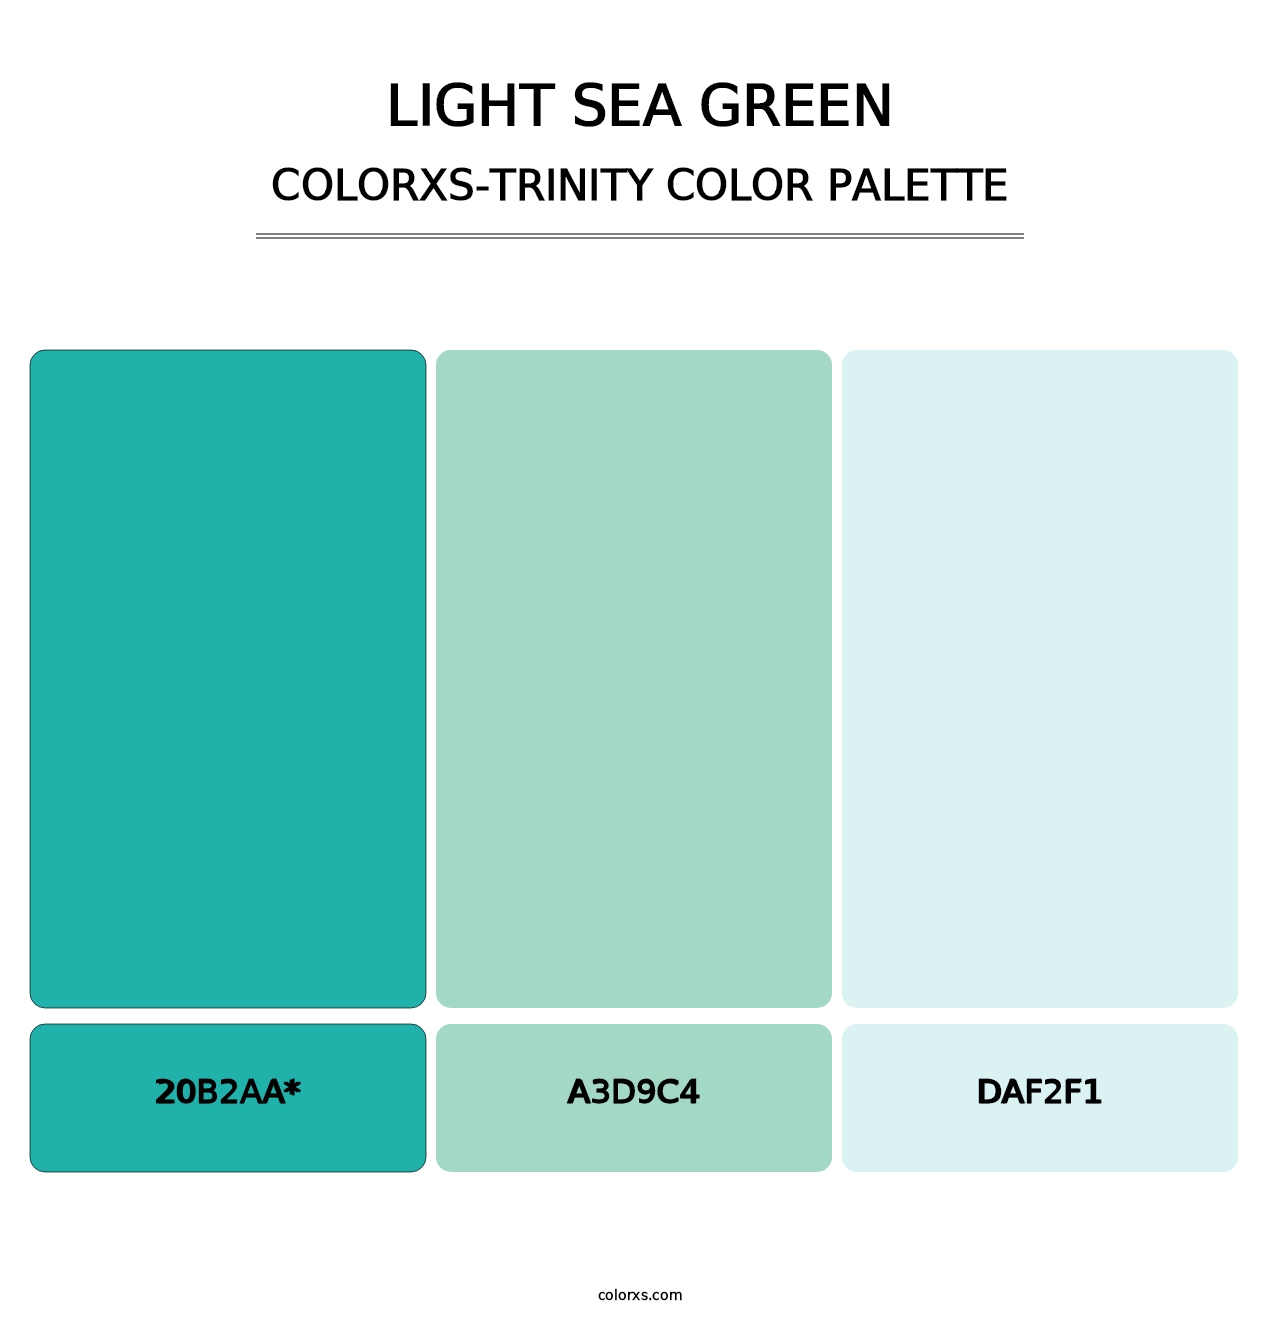 Light Sea Green - Colorxs Trinity Palette